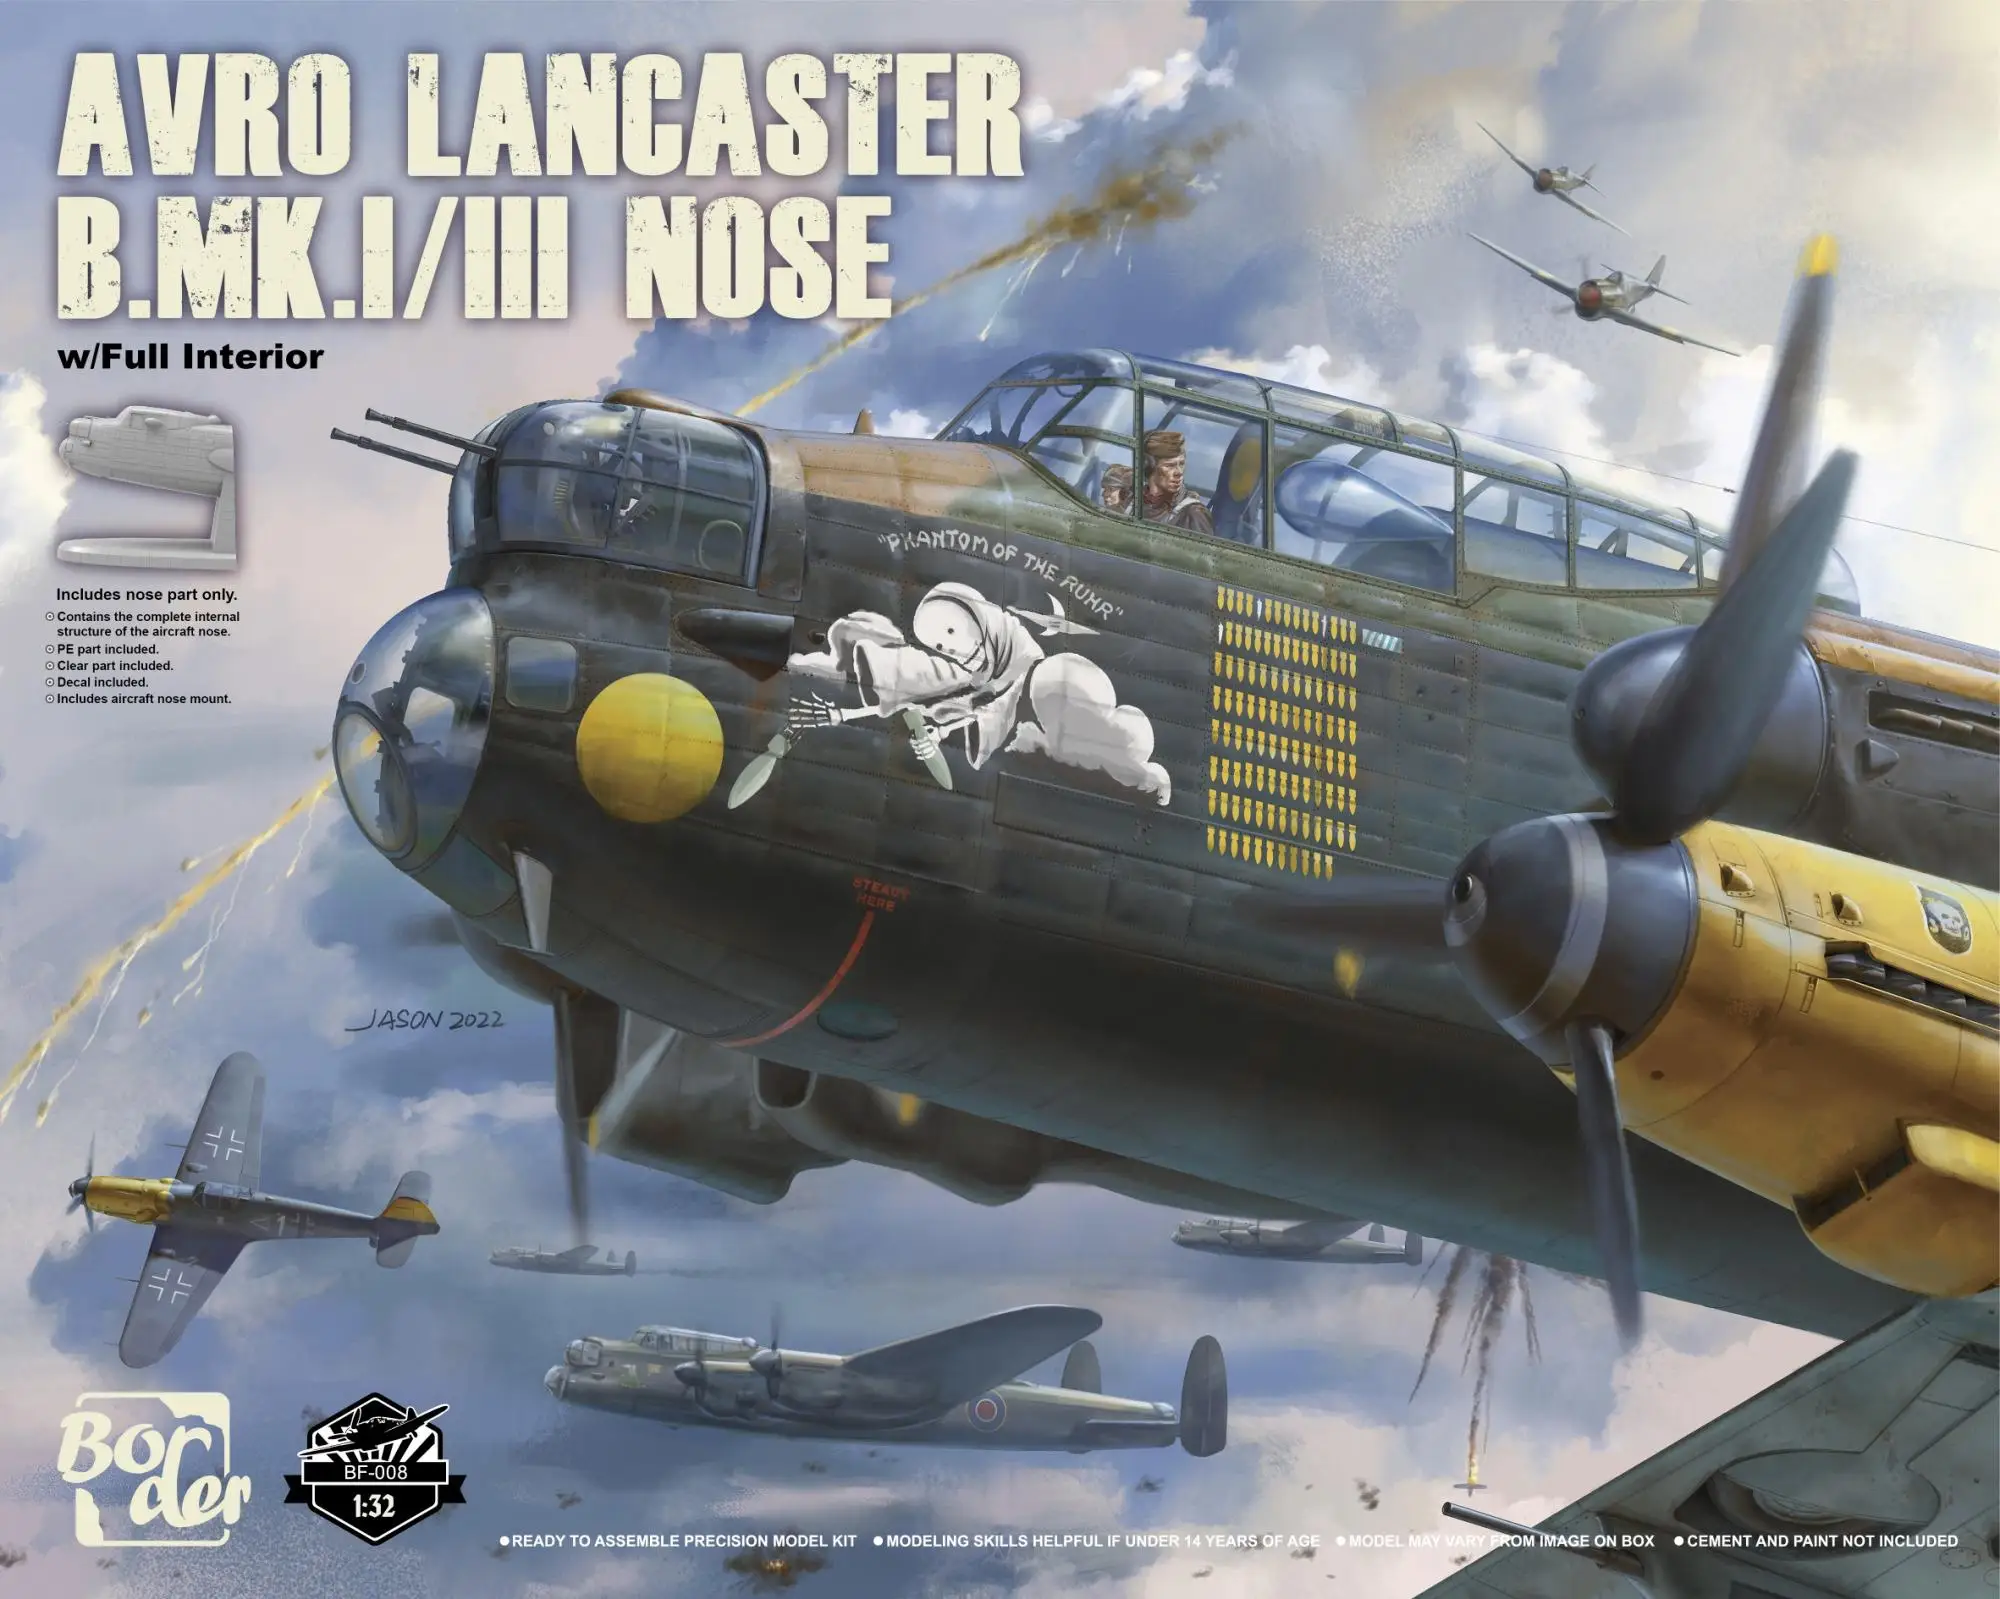 

Border BF-008 1/32 Avro Lancaster B.Mk.I/III Nose w/полный комплект моделей интерьера